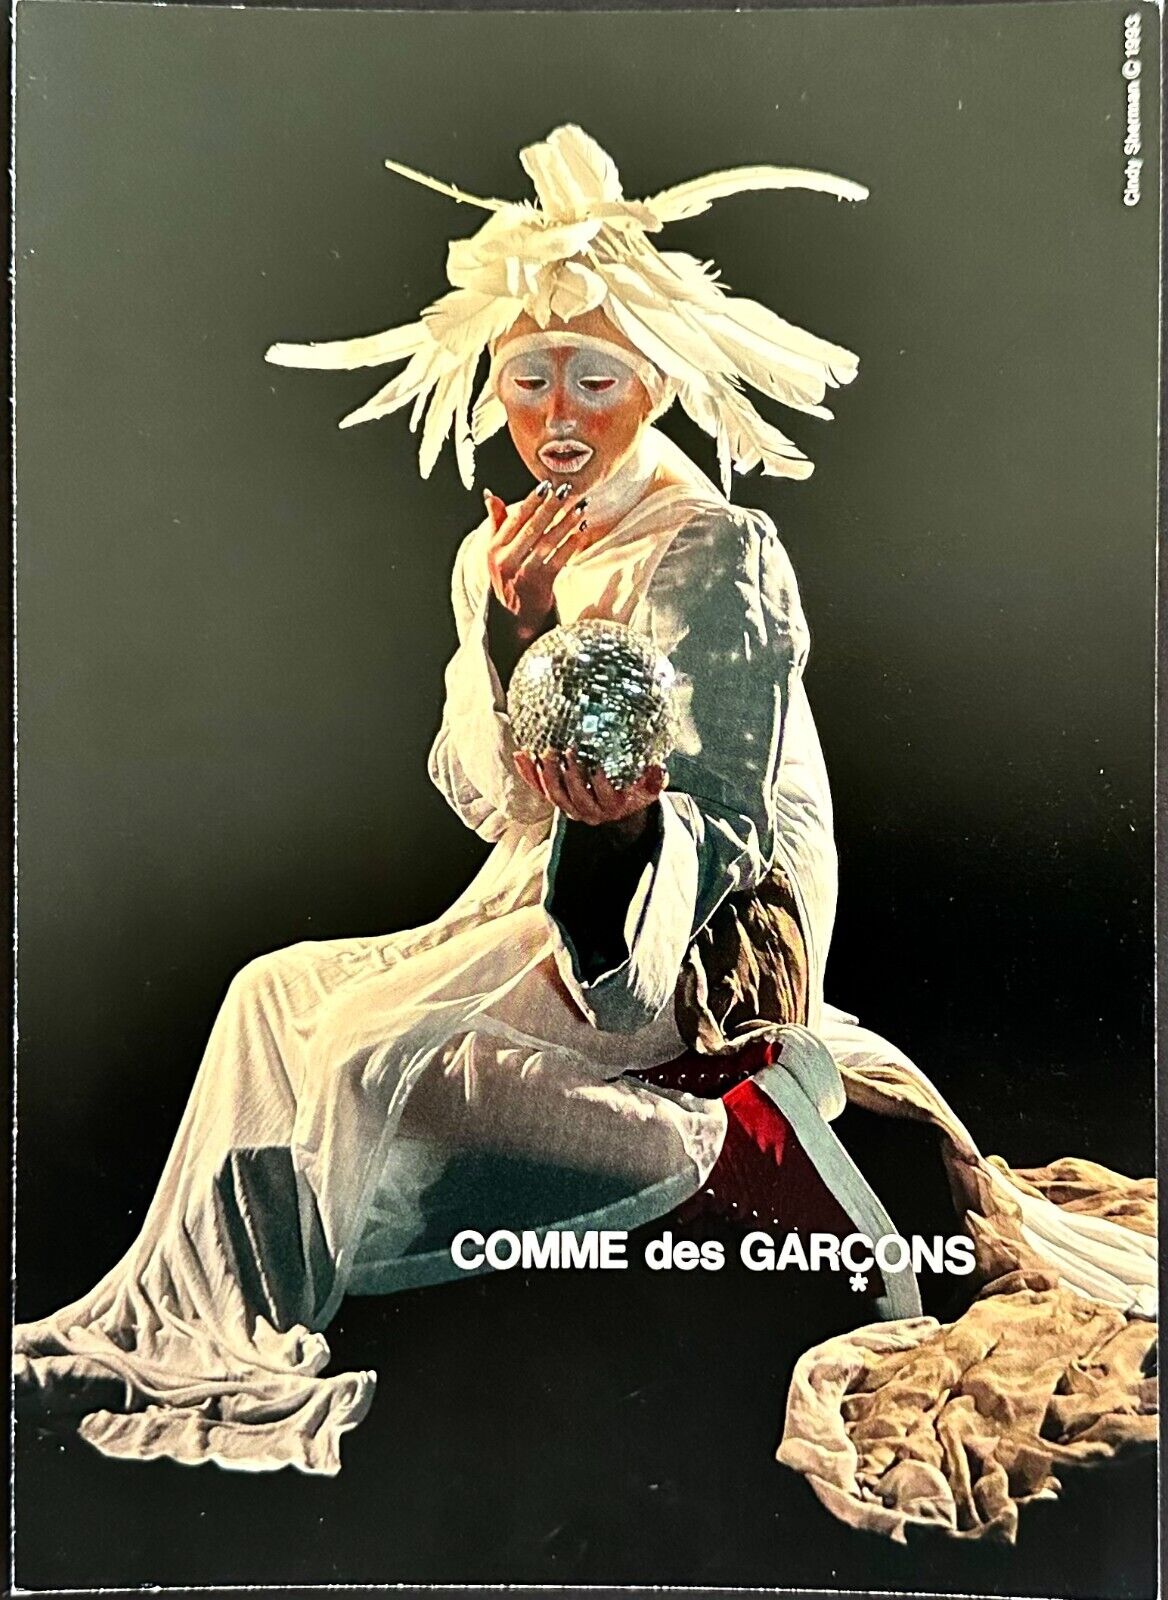 Rare  COMME des GARÇONS Postcard - CINDY SHERMAN 1993